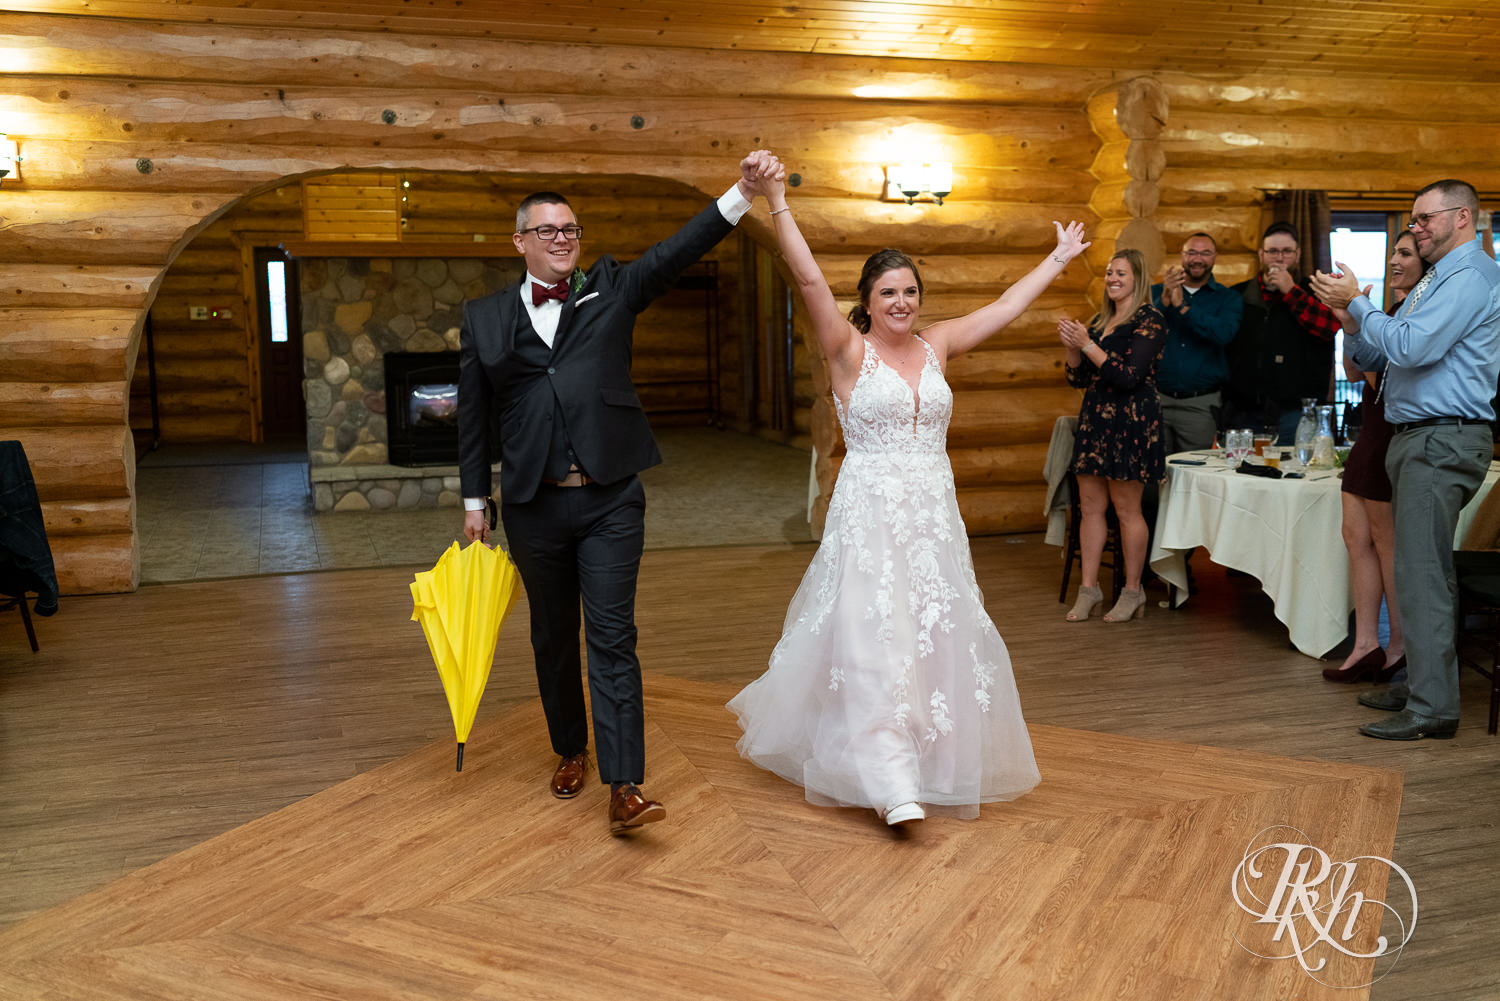 Bride and groom grand entrance at Glenhaven Events in Farmington, Minnesota.